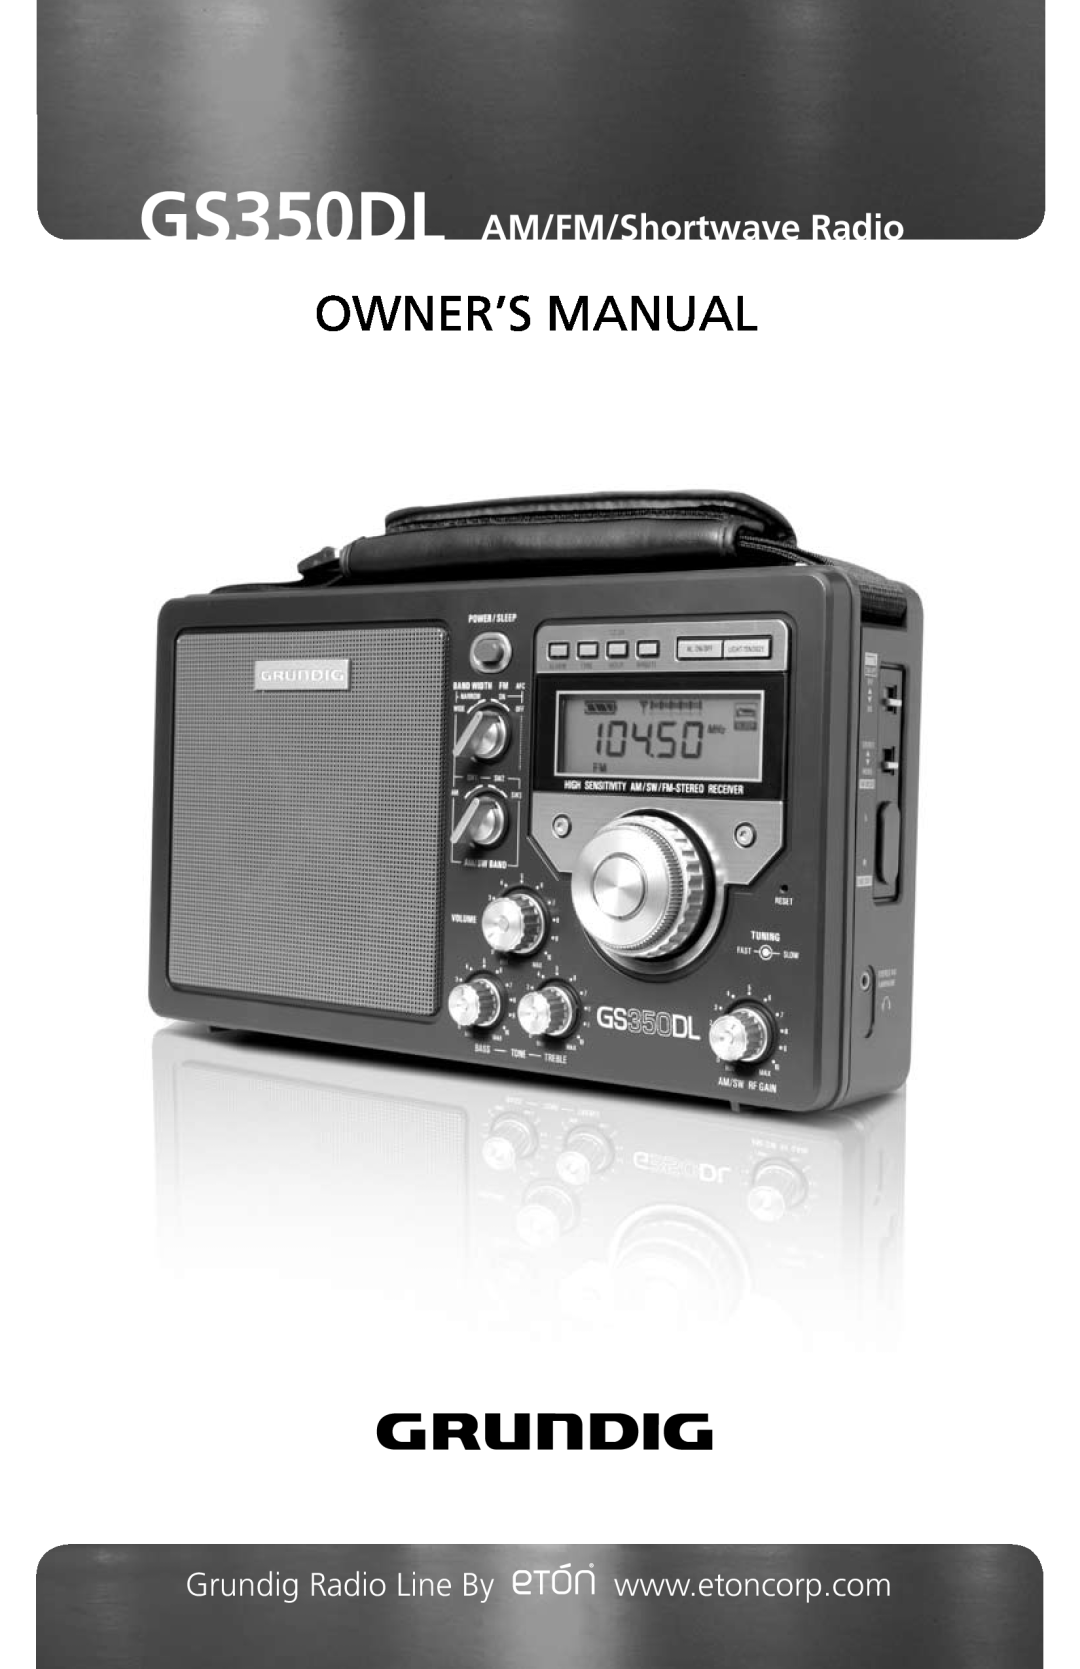 Grundig owner manual GS350DL AM/FM/Shortwave Radio 